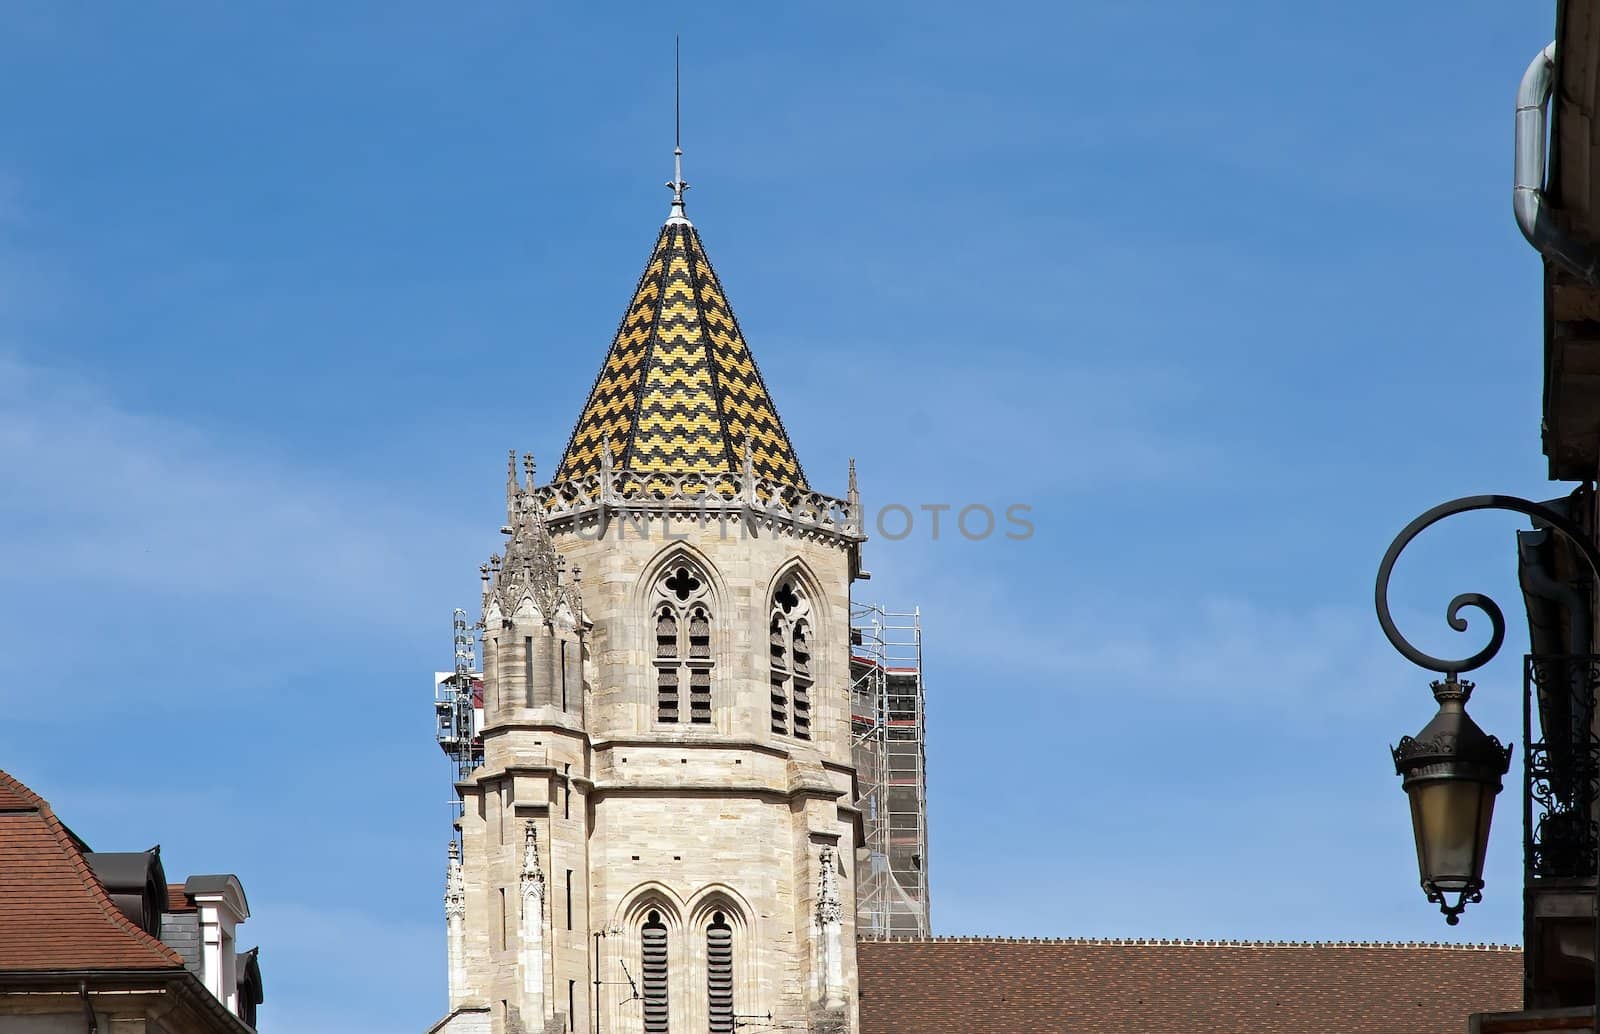 Cathedral Saint Bénigne, turret (Dijon Burgundy) by neko92vl